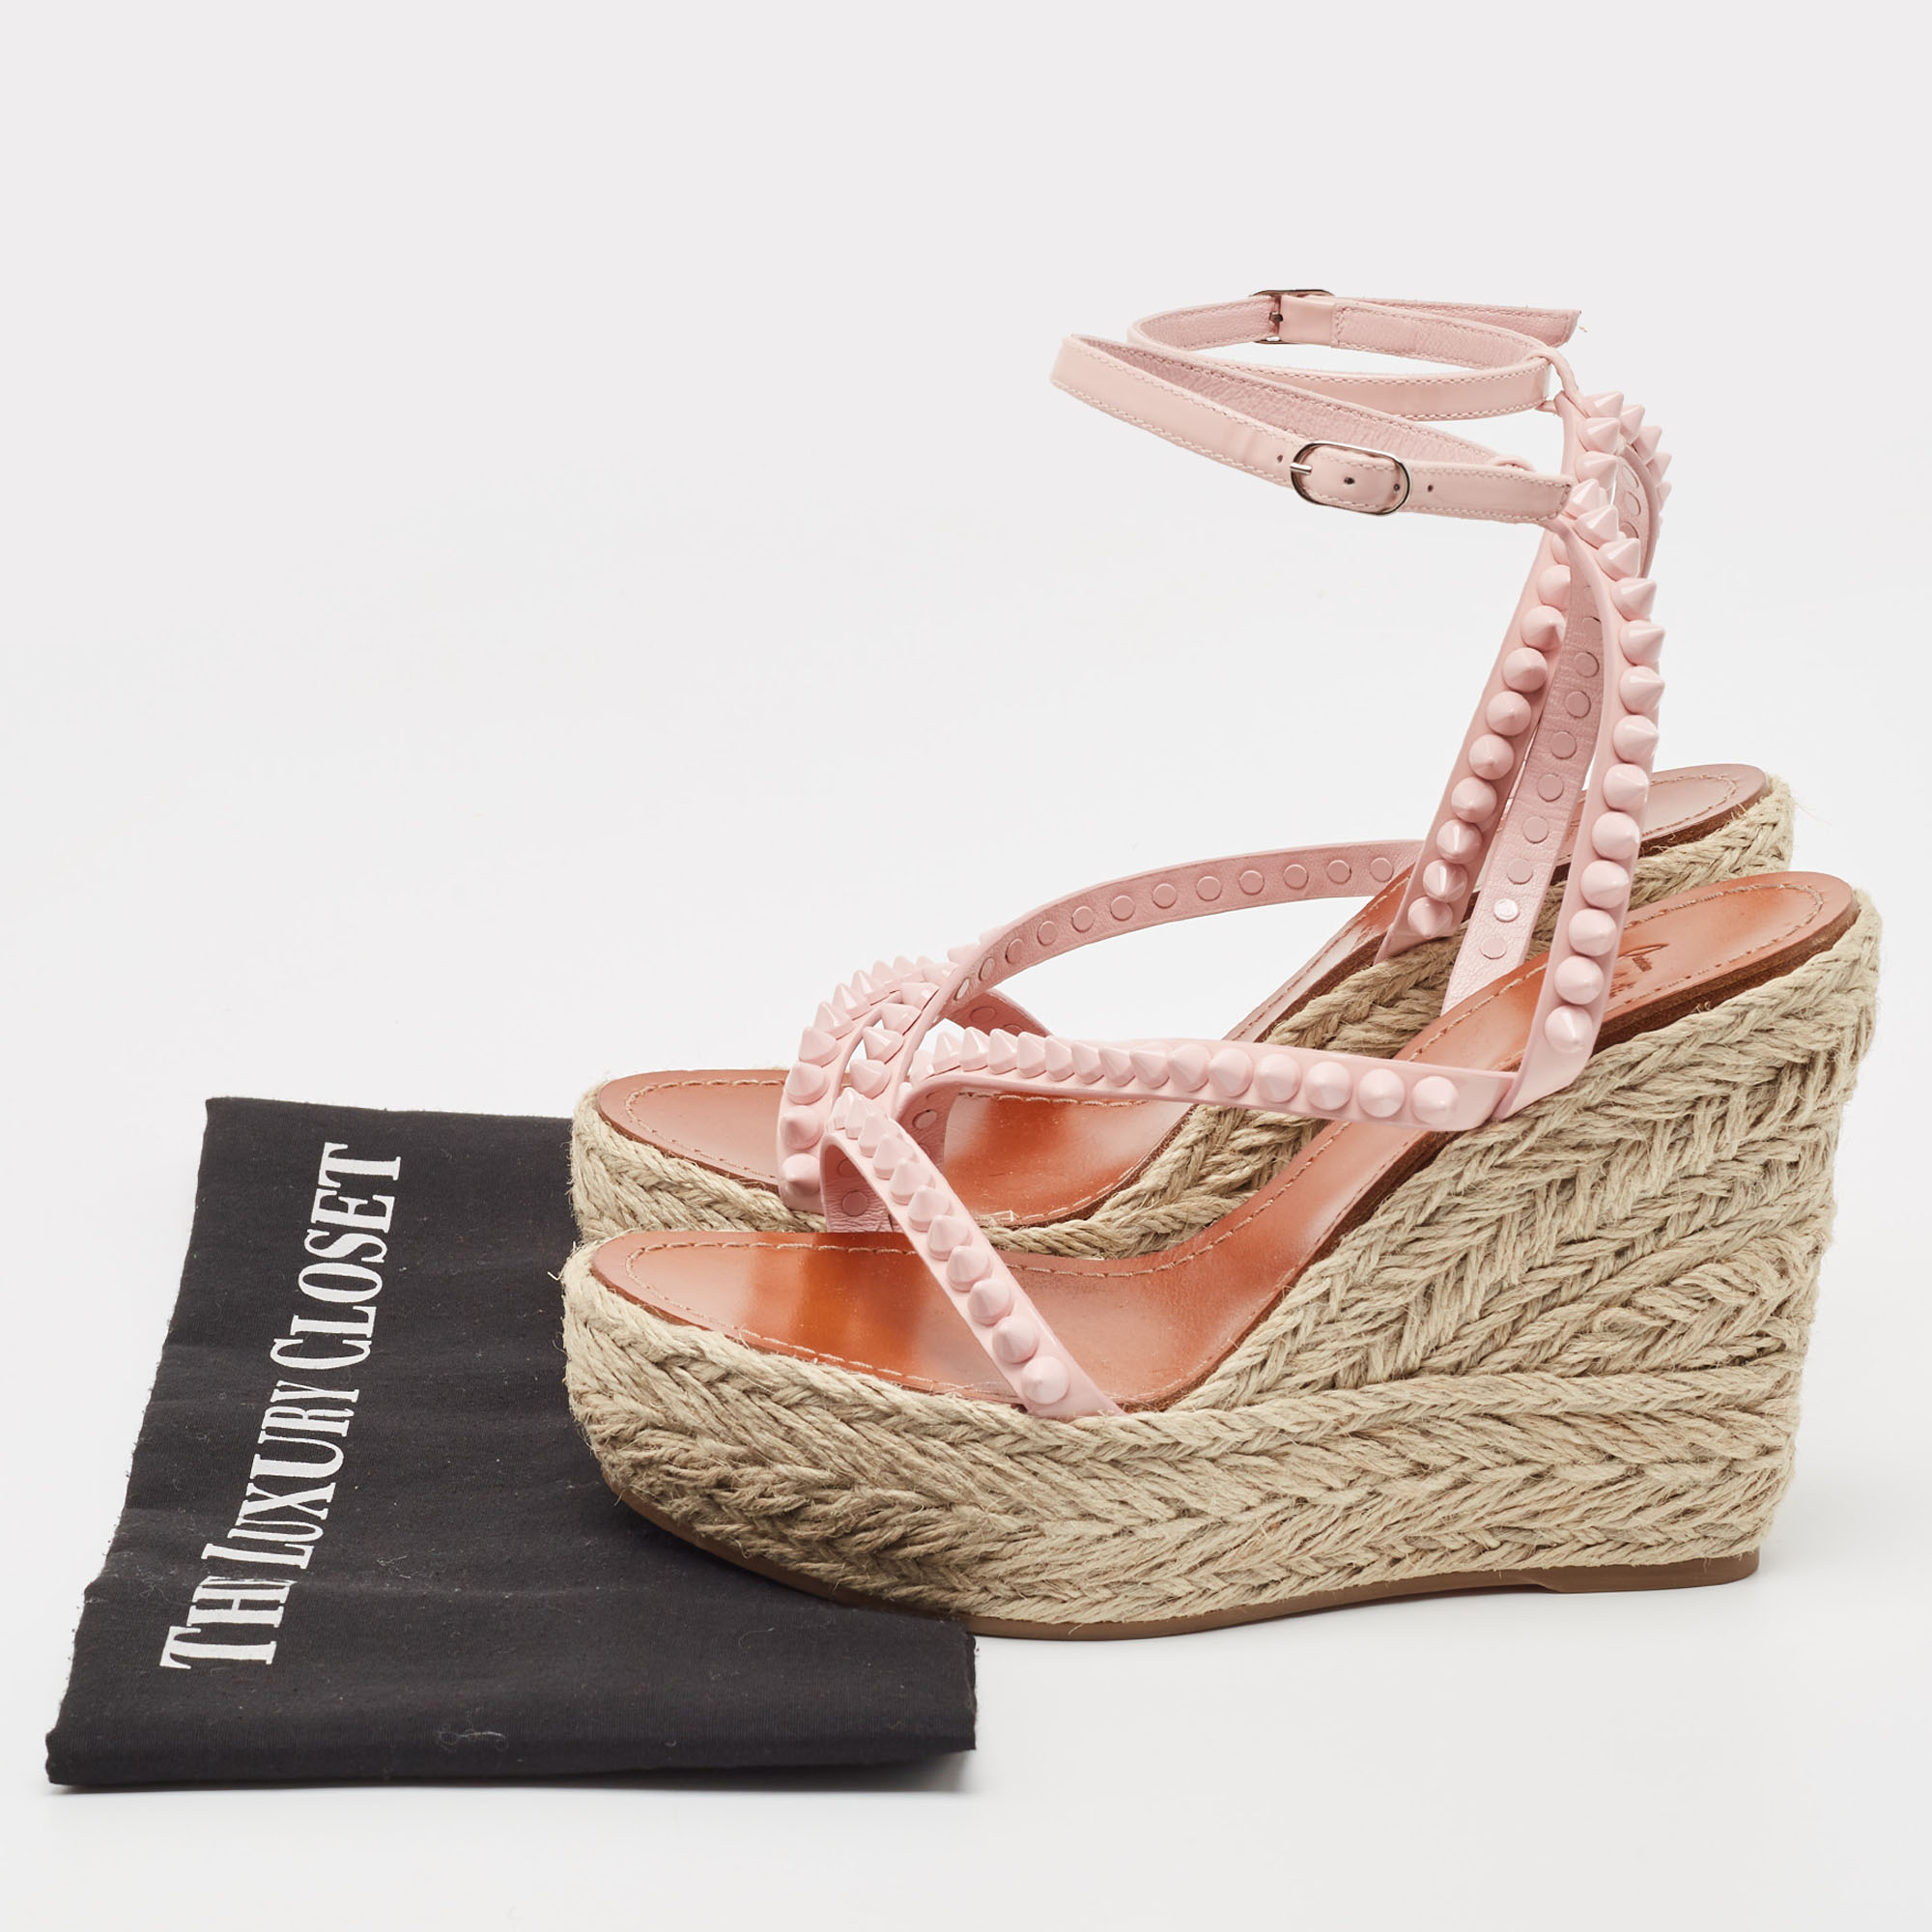 Christian Louboutin Pink Patent Leather Mafaldina Spike Wedge Espadrille Ankle Strap Sandals Size 37